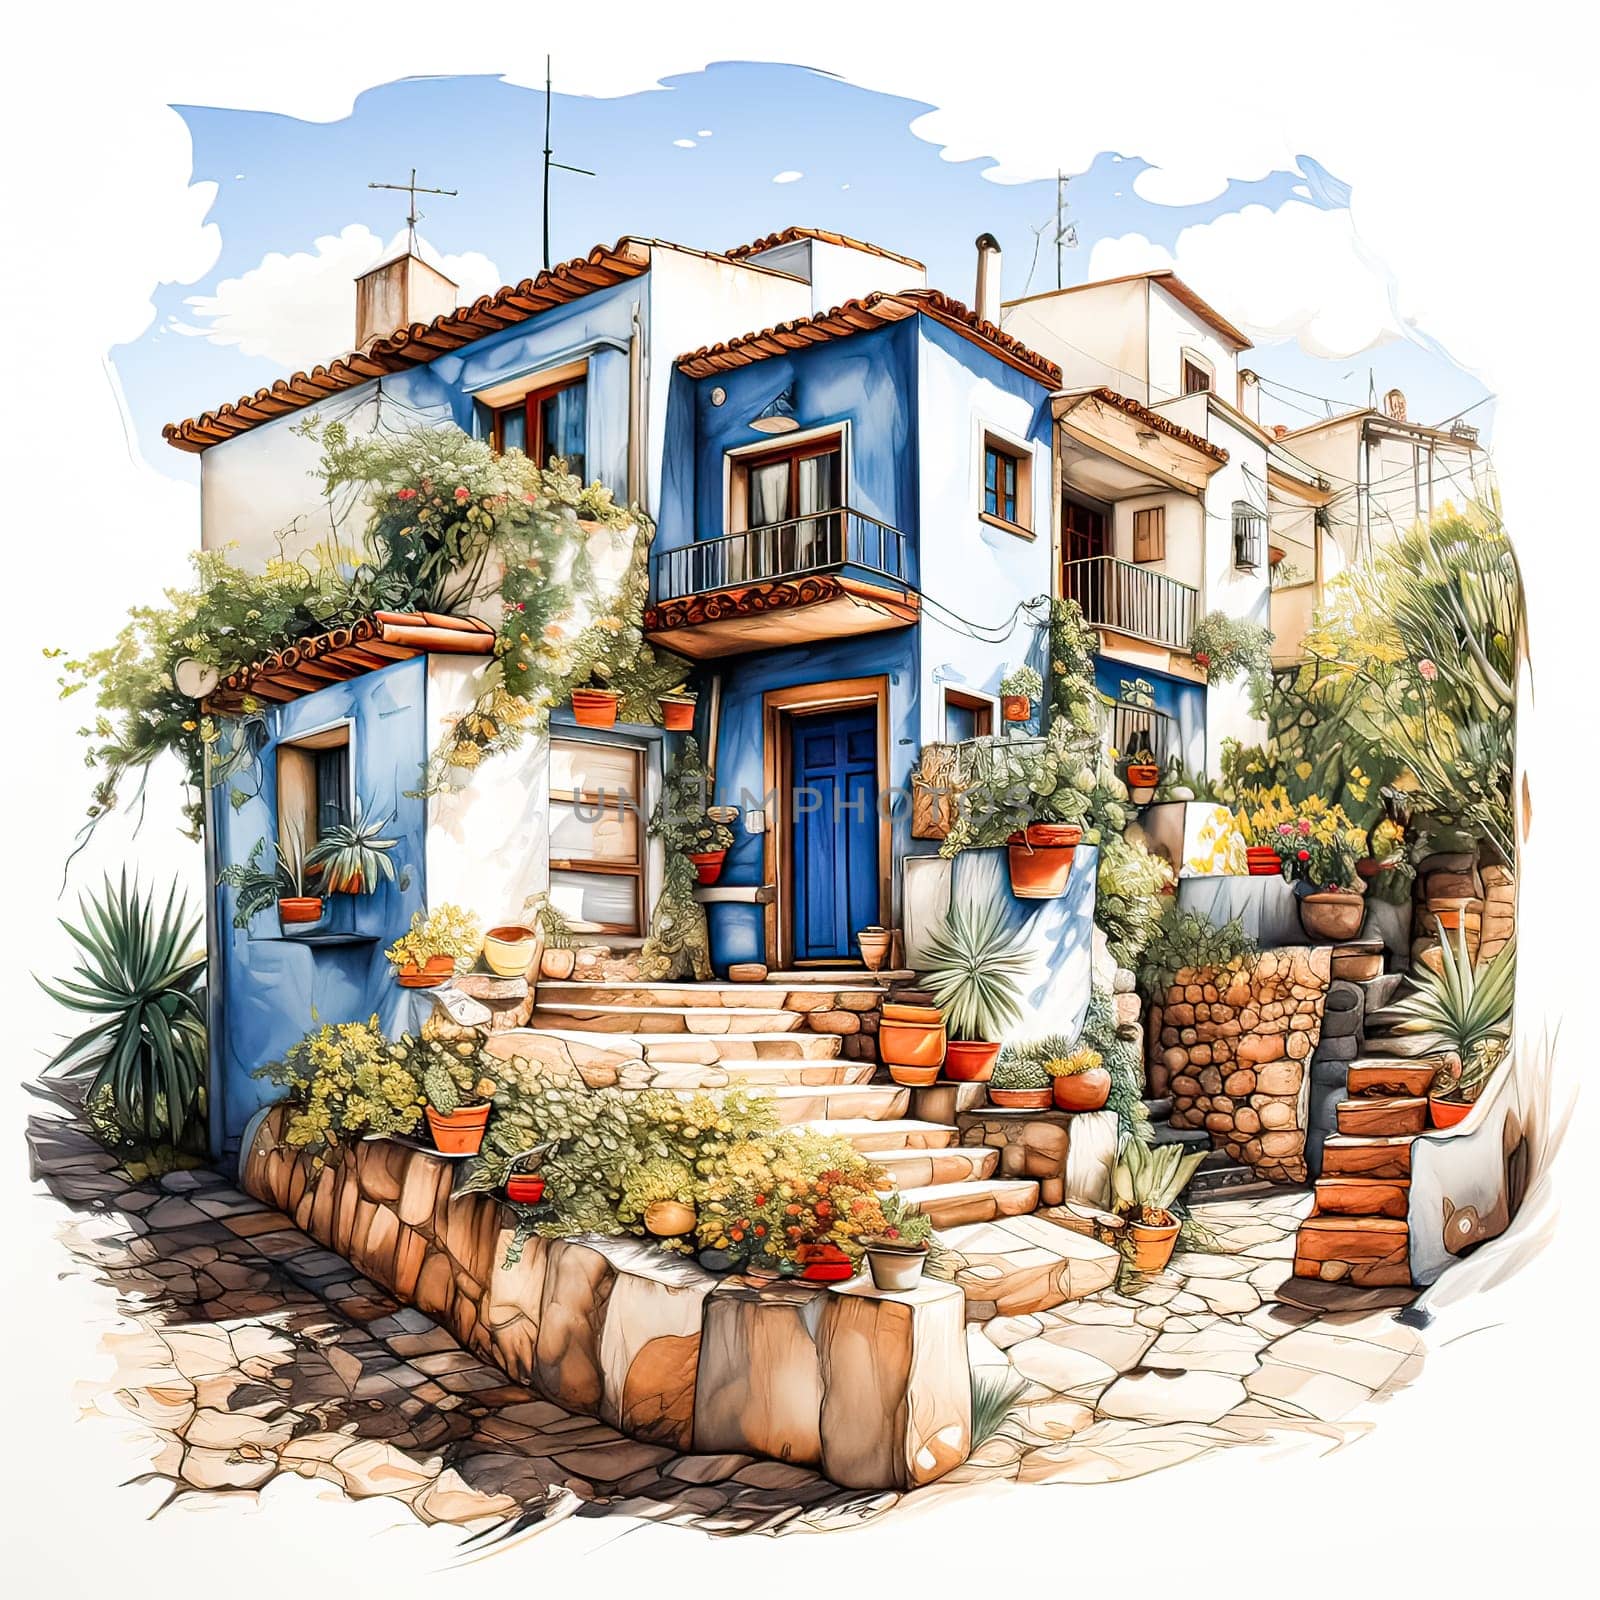 Mediterranean Charm, Sketch in watercolor liners captures a vivid, Spanish style interior design